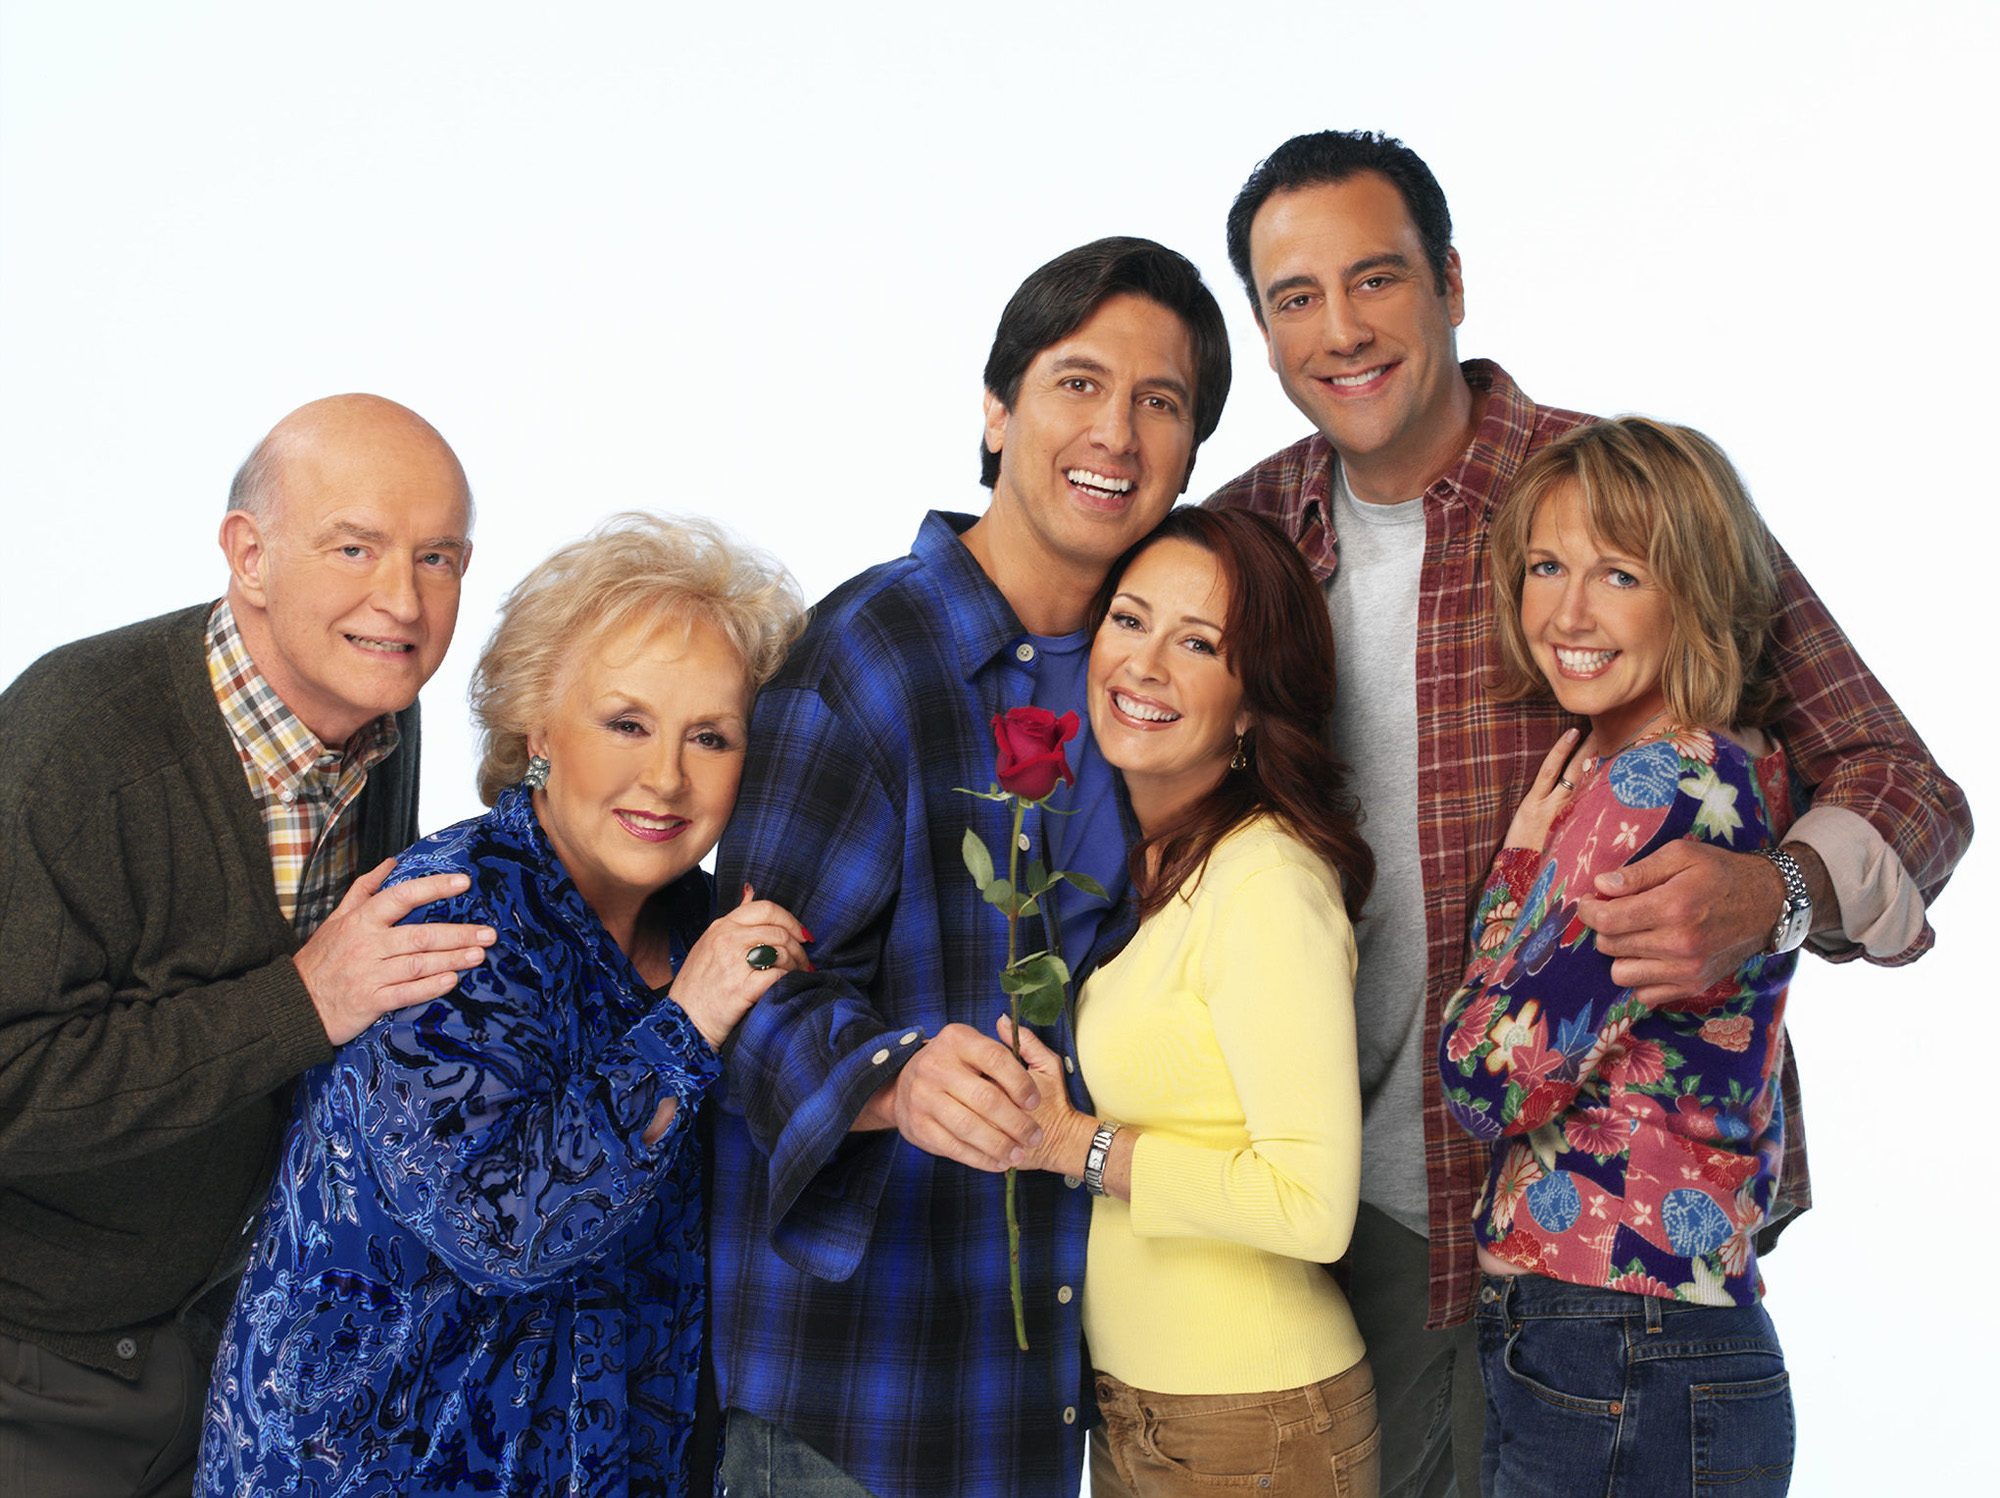 Cast of 'Everybody Loves Raymond' | (L-R) Peter Boyle, Doris Roberts, Ray Romano, Patricia Heaton, Brad Garrett, and Monica Horan